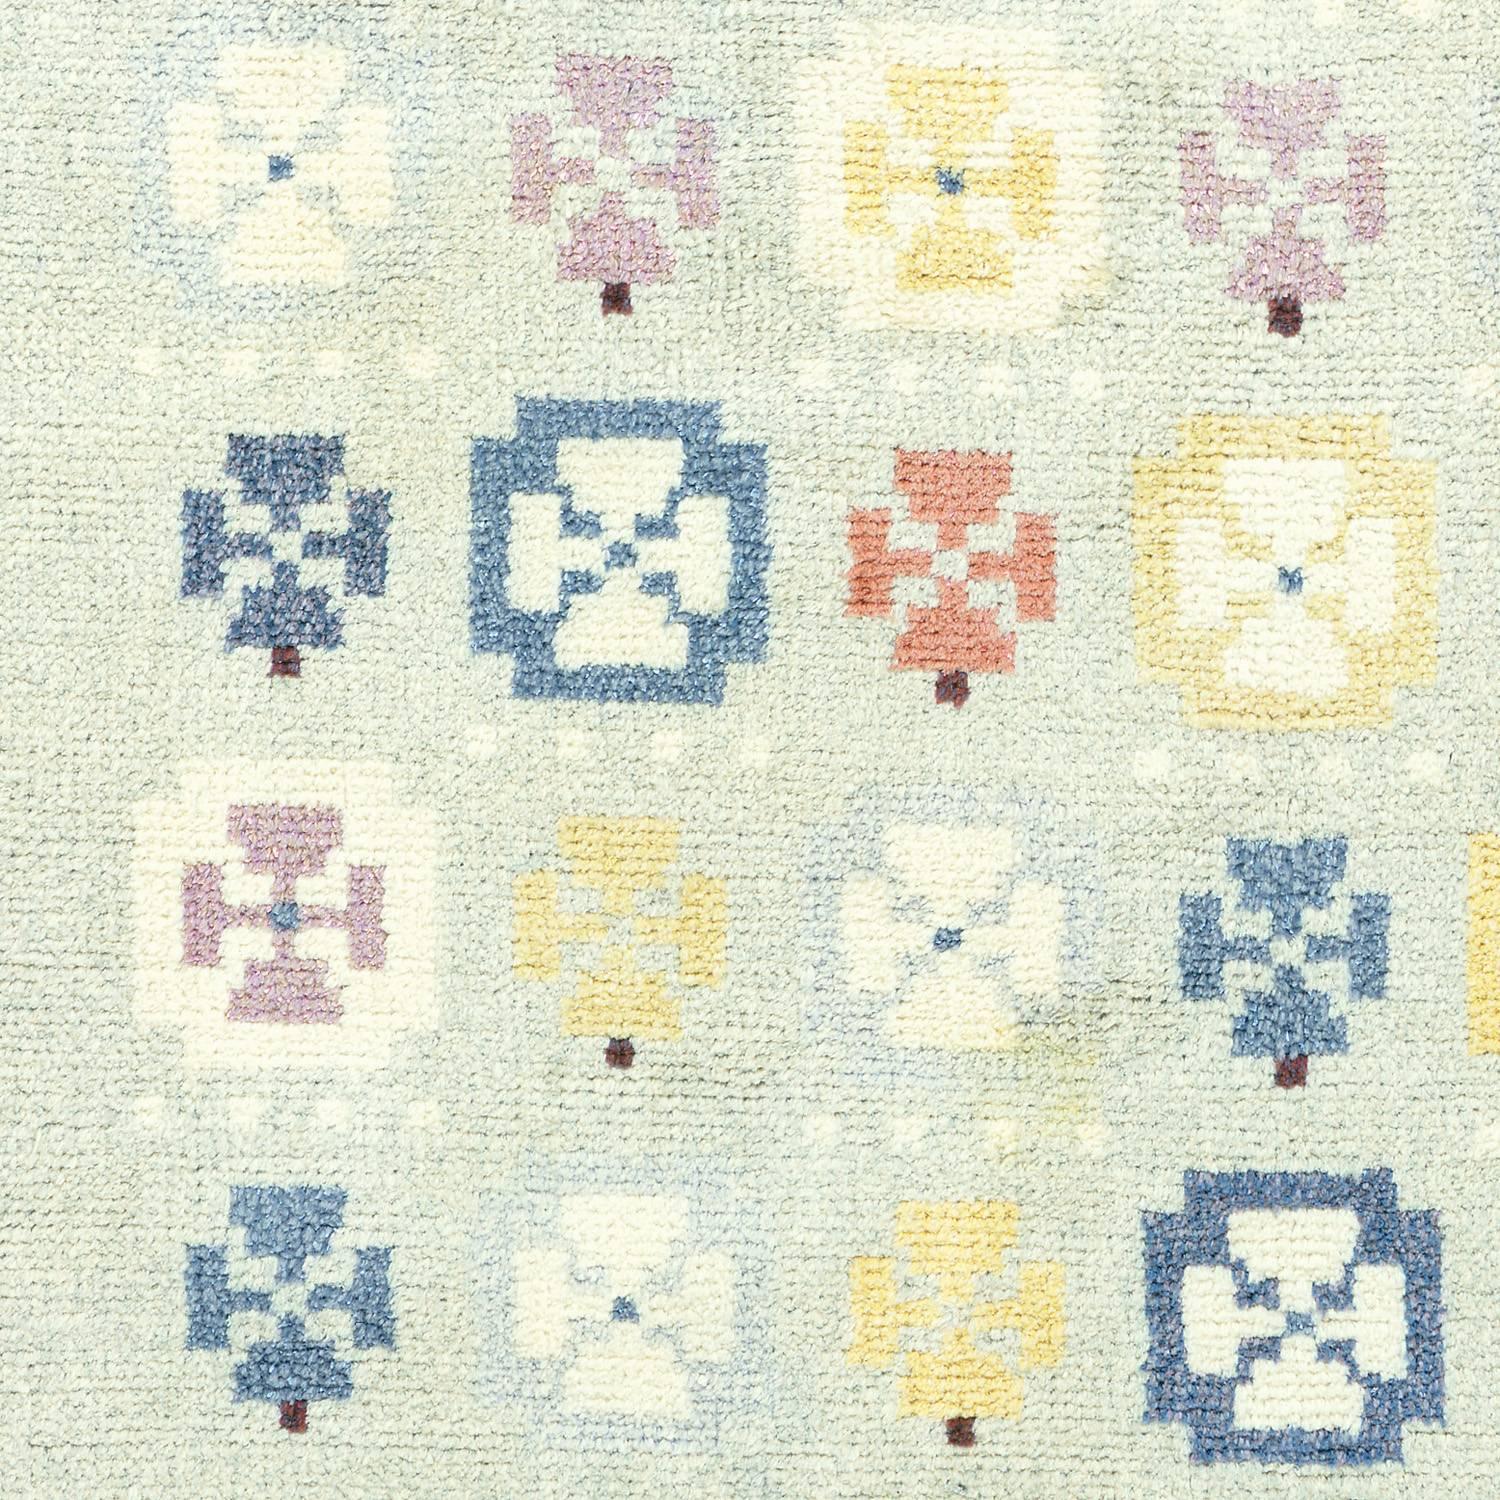 20th century Swedish pile-weave carpet
Handwoven